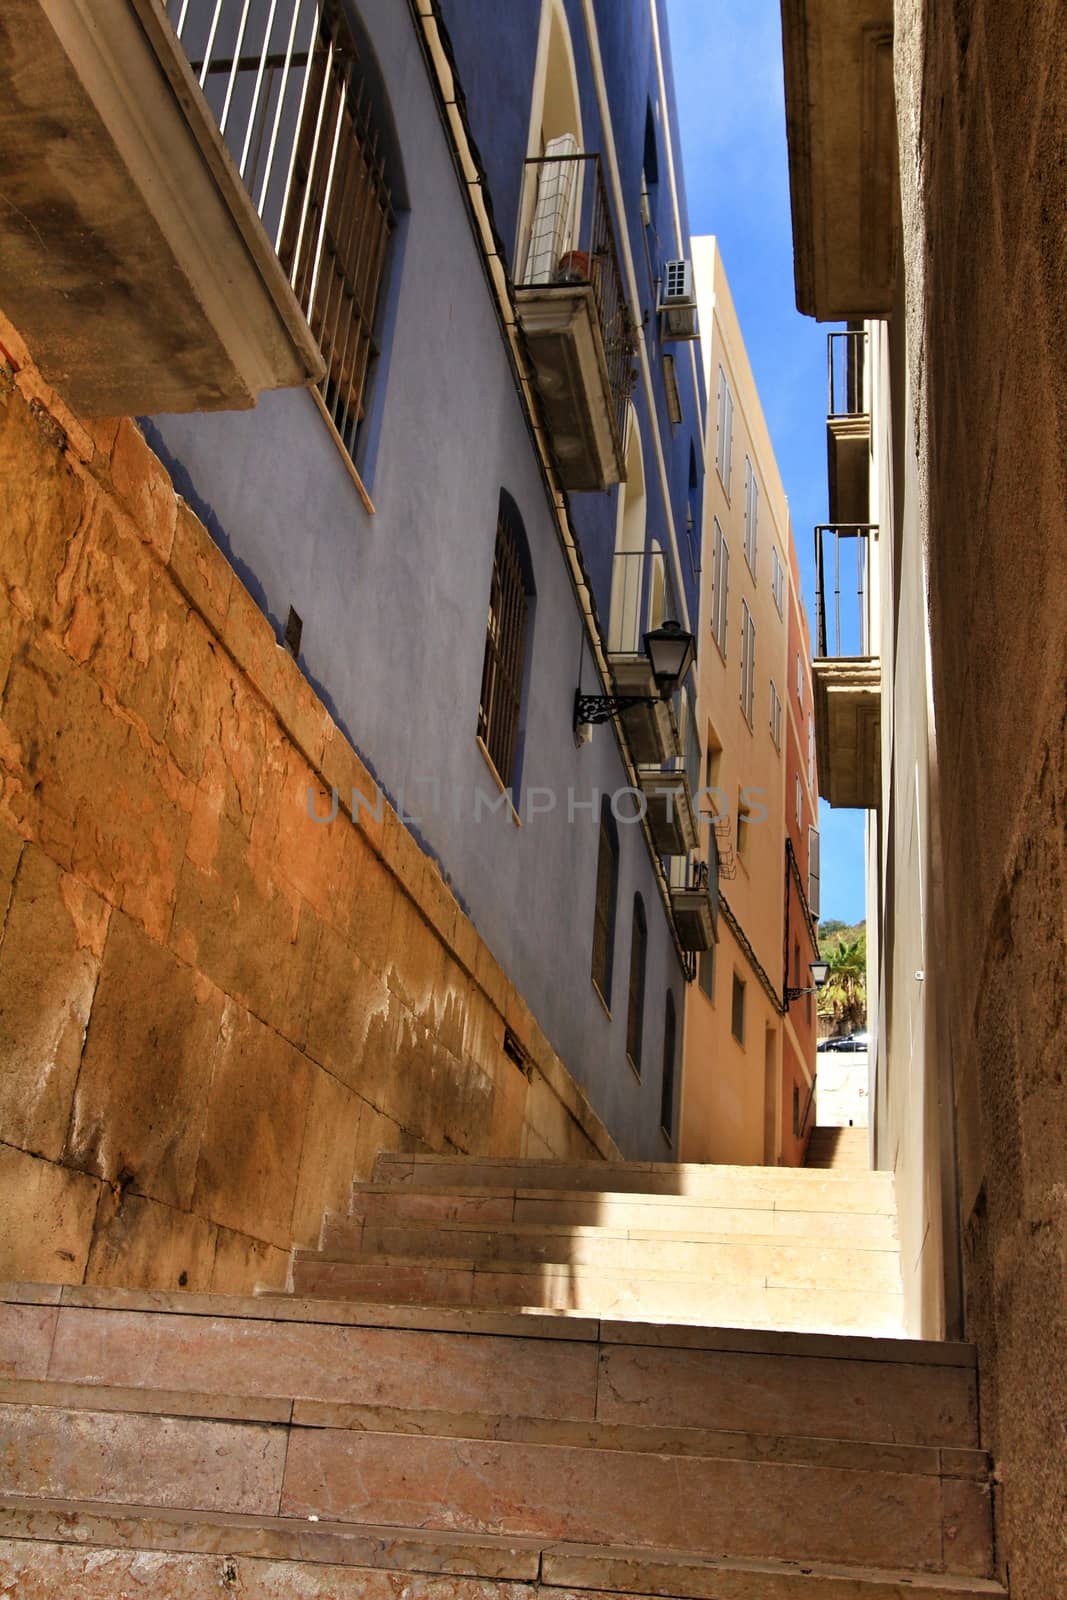 Narrow streets with old facades, windows and balconies of Santa Cruz  neighborghood in Alicante city